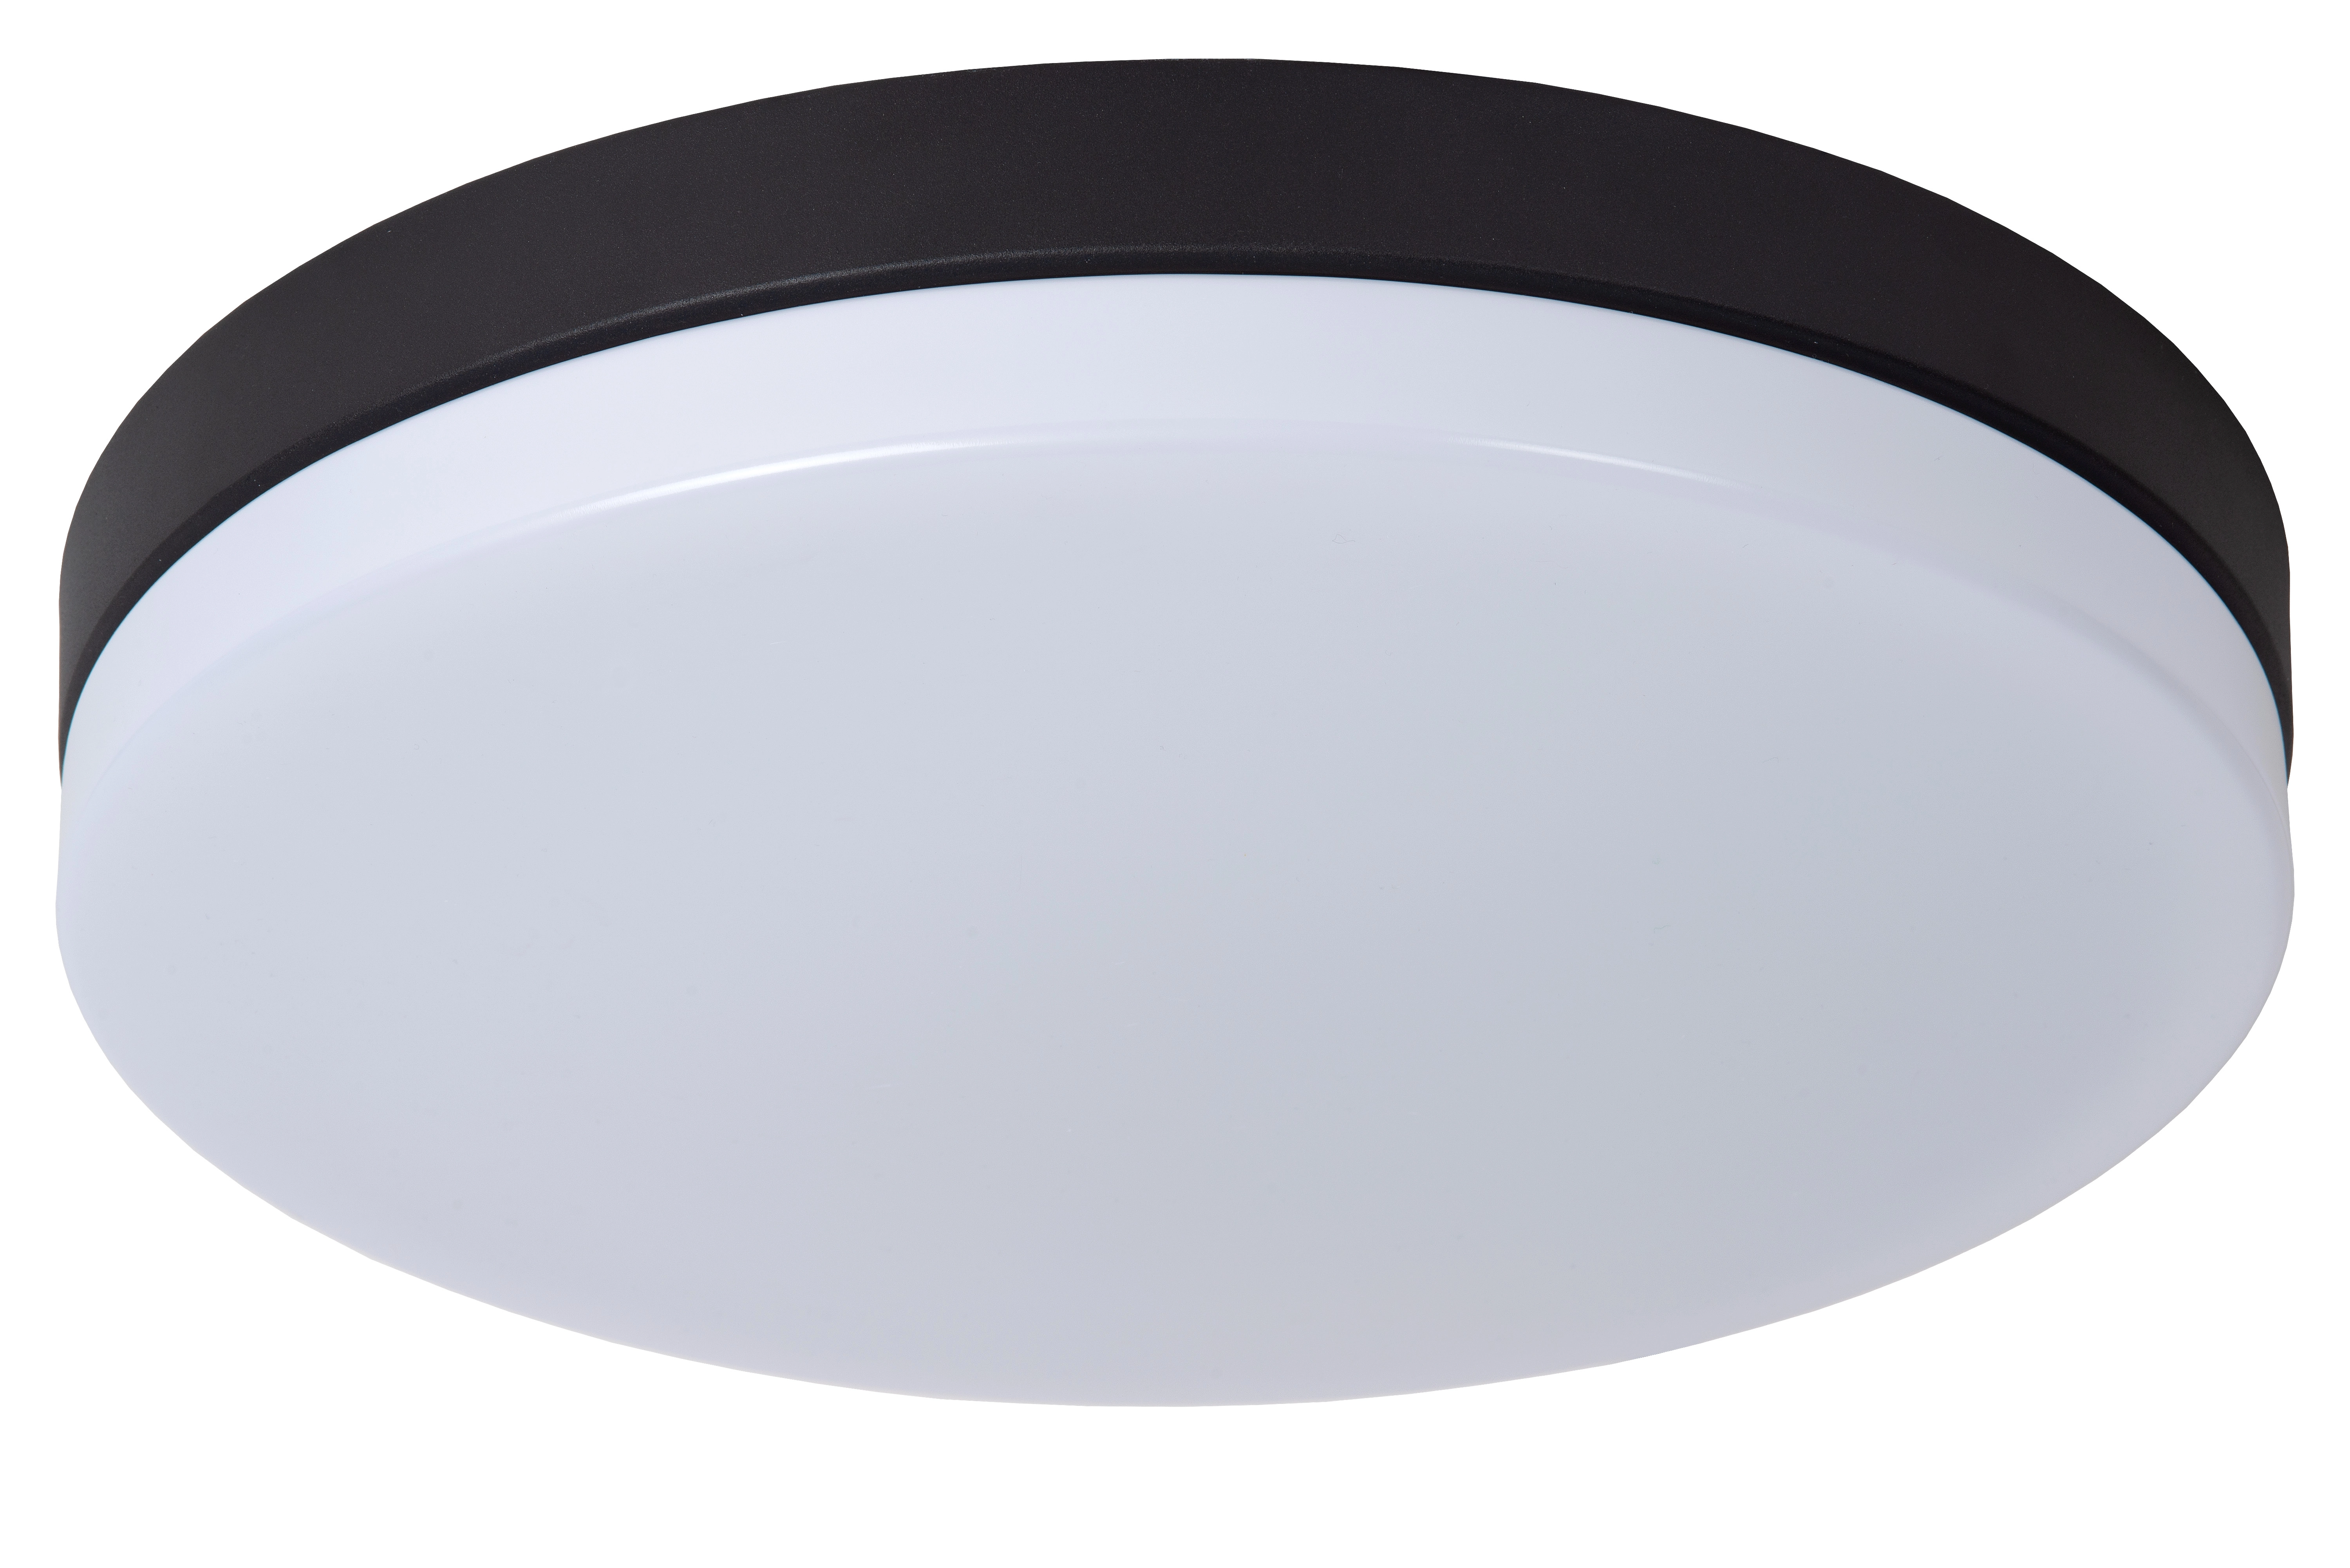 LU 79111/40/30 Lucide BISKIT - Flush ceiling light Bathroom - Ø 40 cm - LED - 1x36W 2700K - IP44 - B